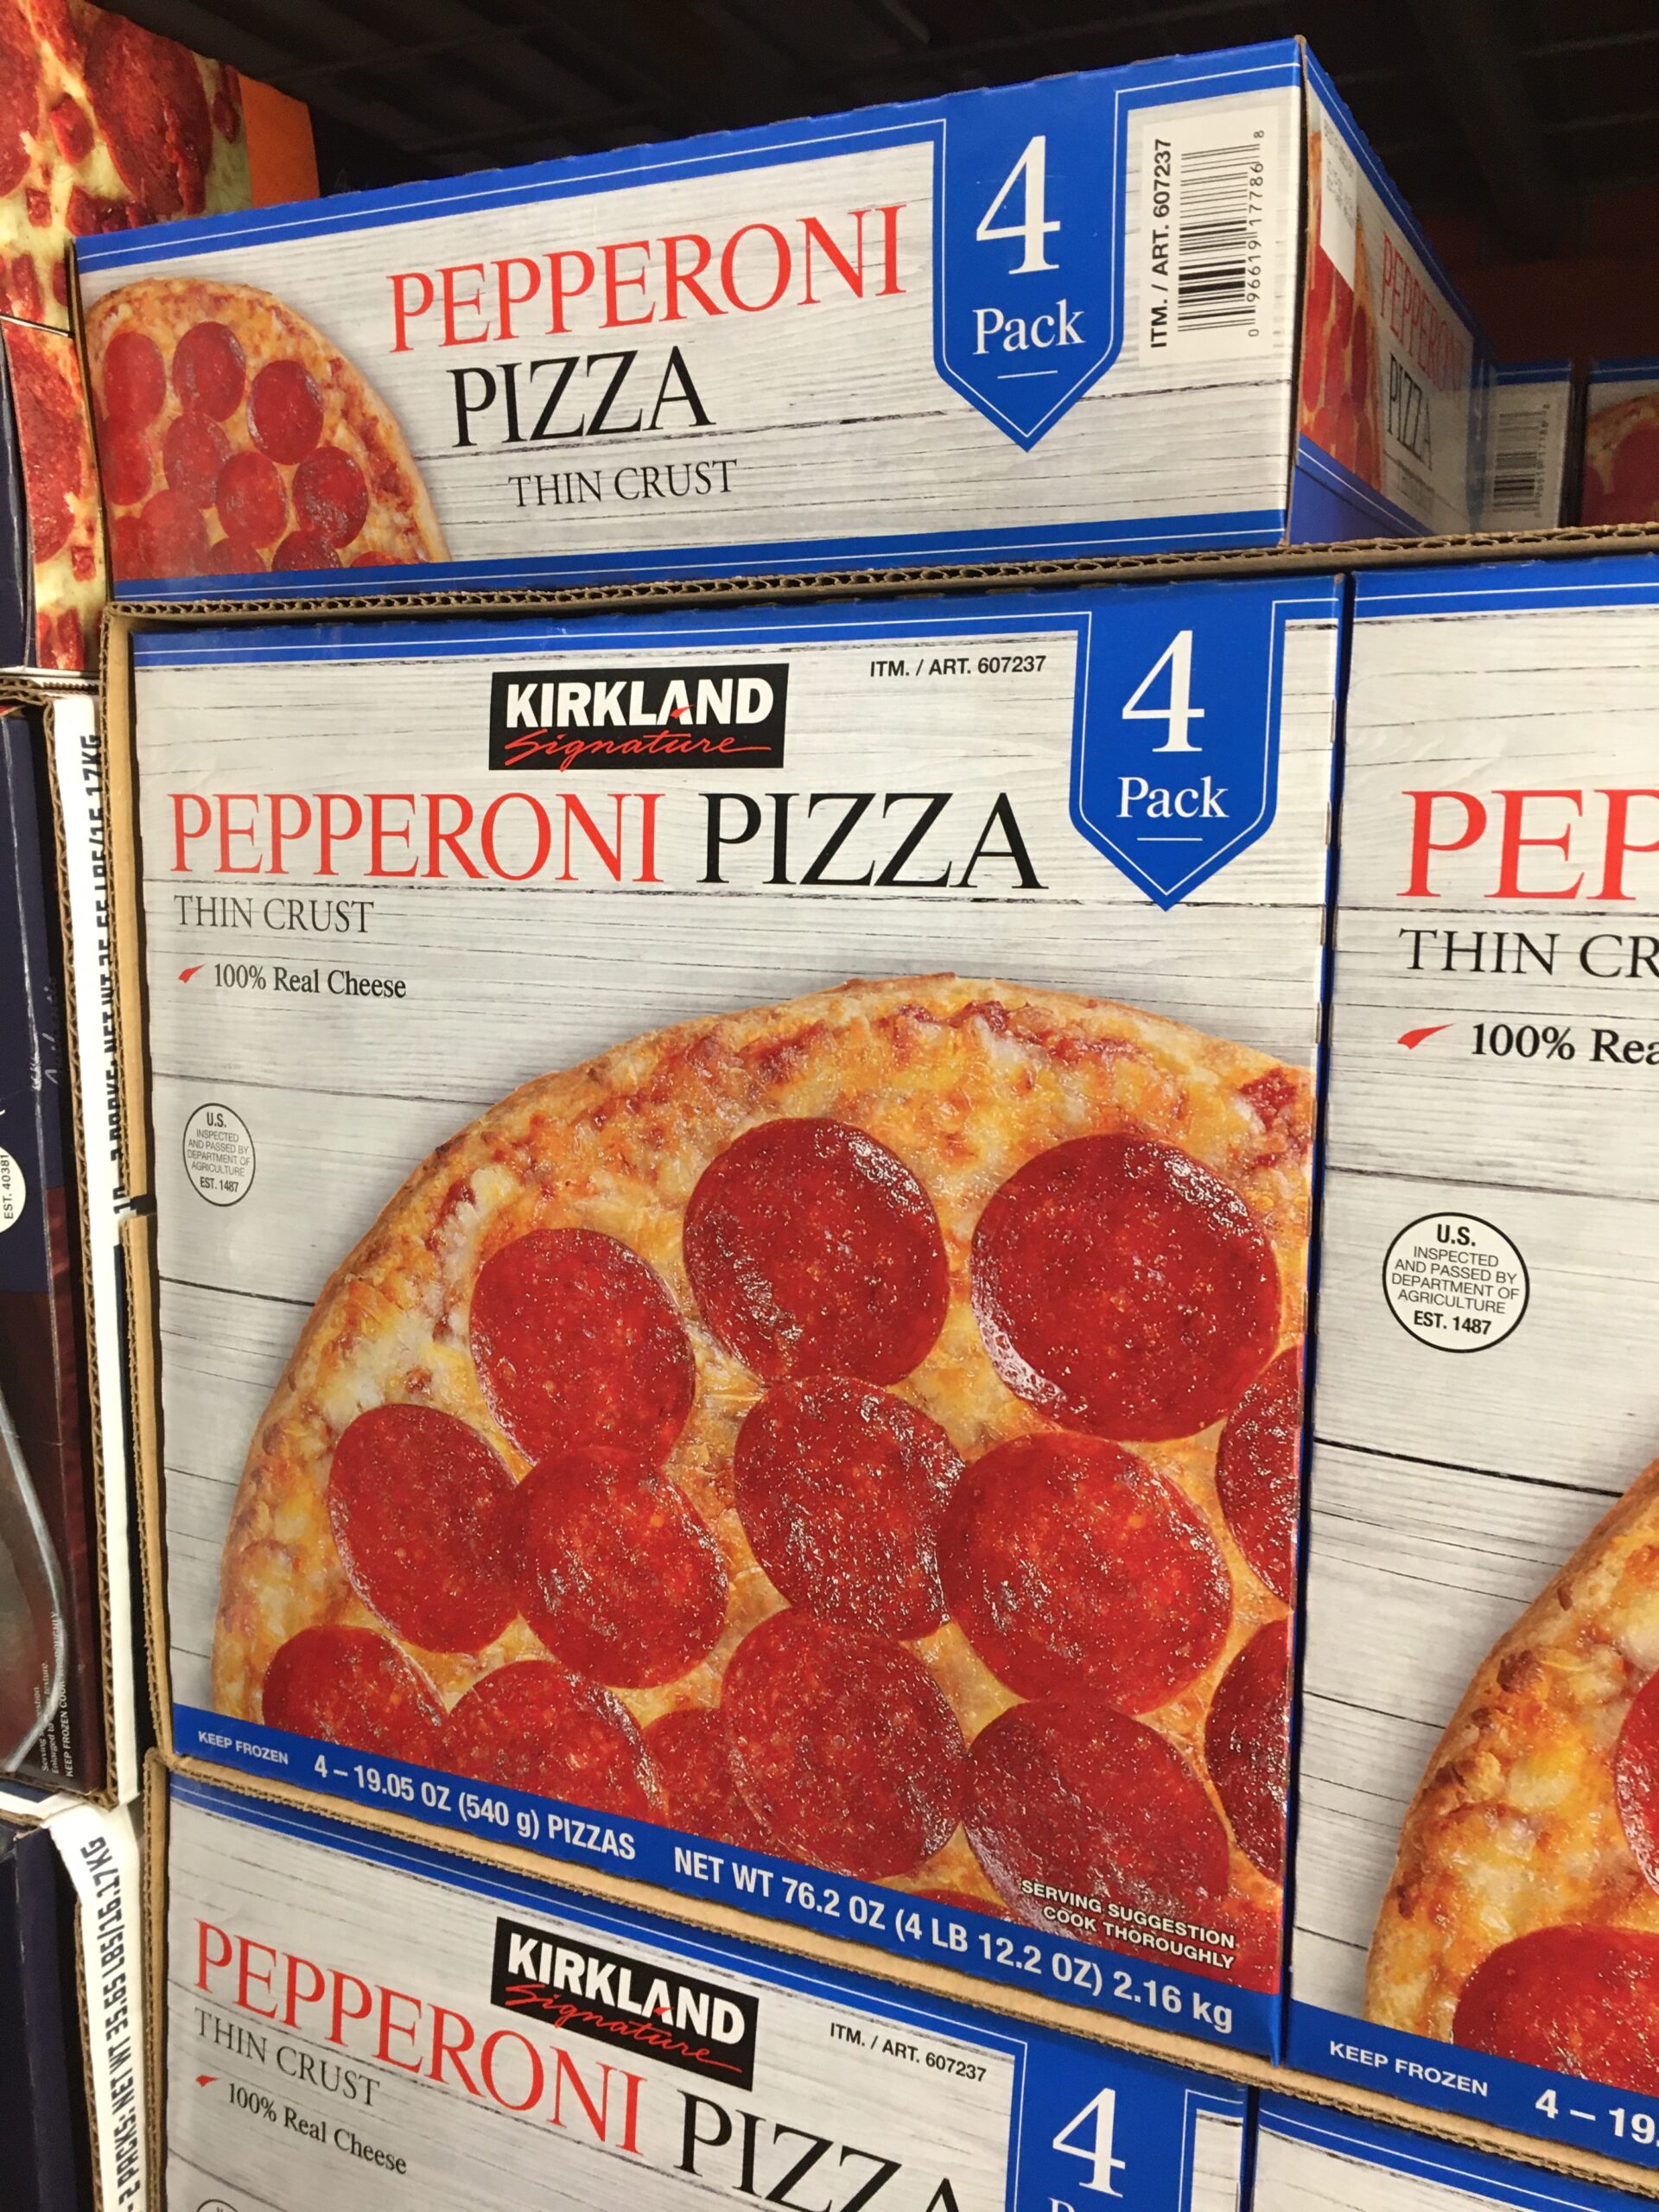 Costco Frozen Pizza: The Kirkland Signature Pepperoni Review